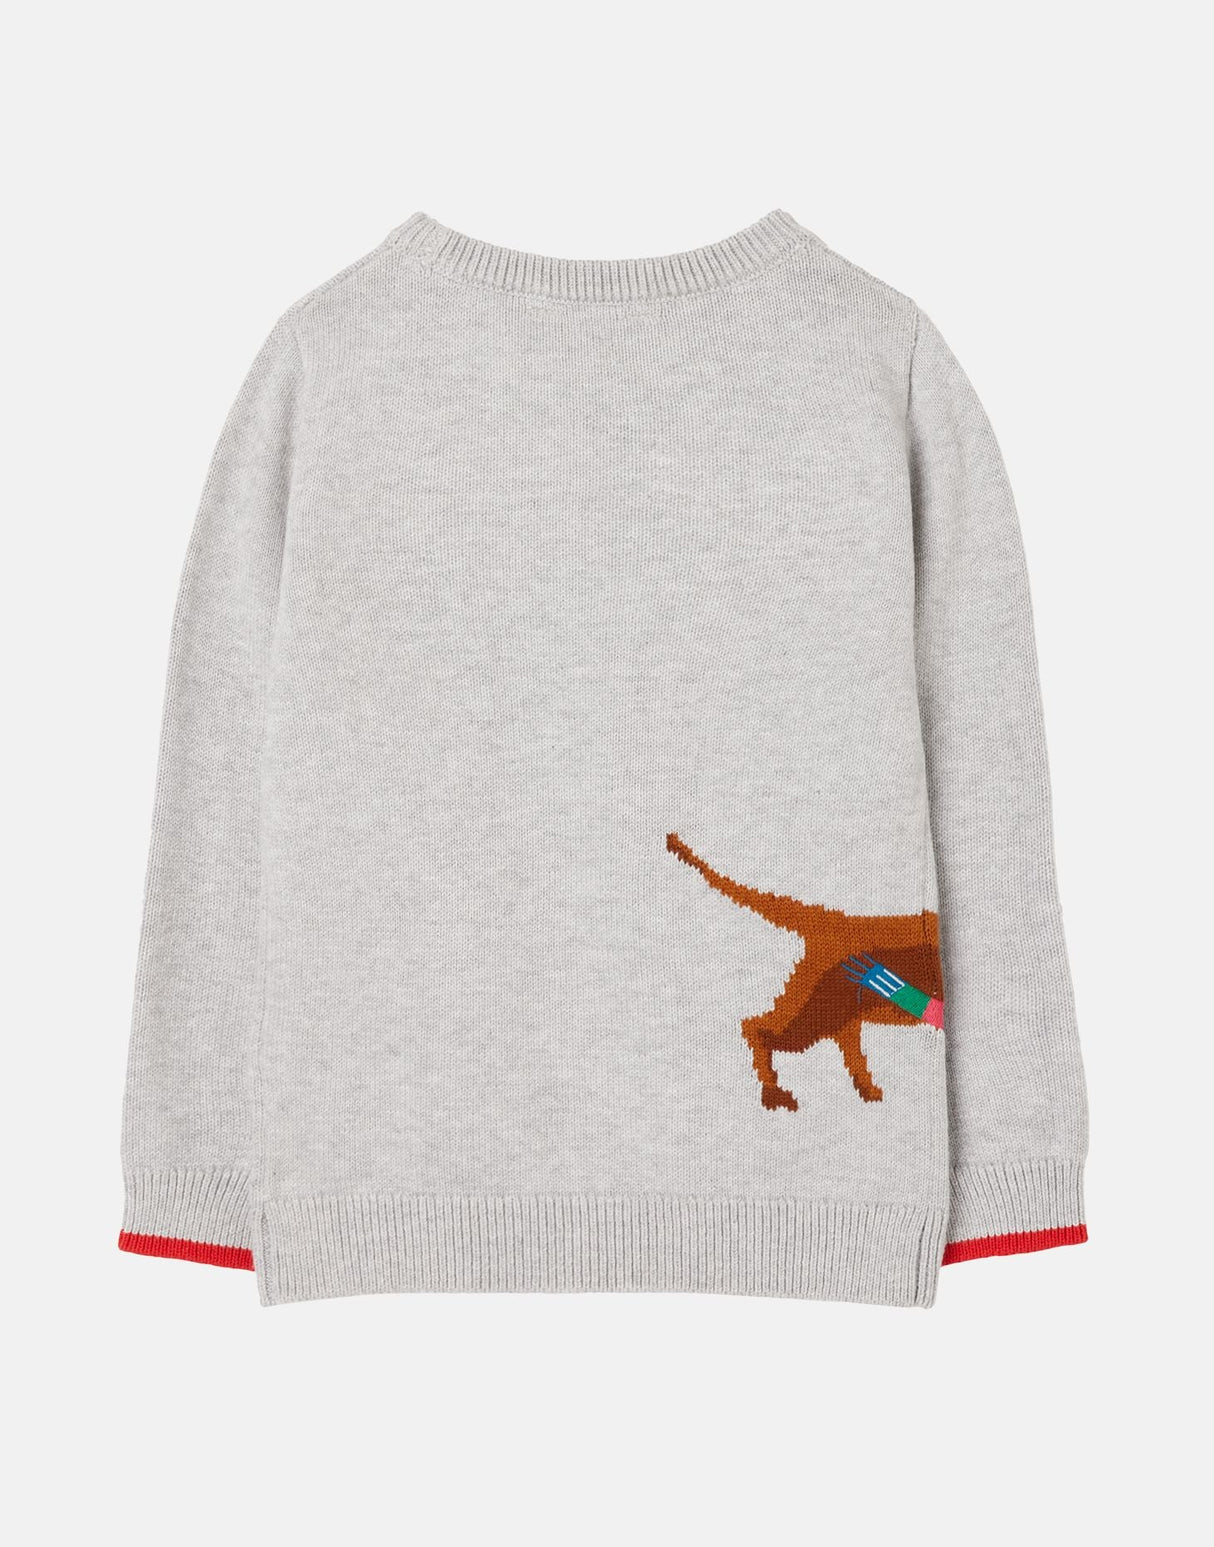 Festive Sweater Festive Dog | Joules - Jenni Kidz